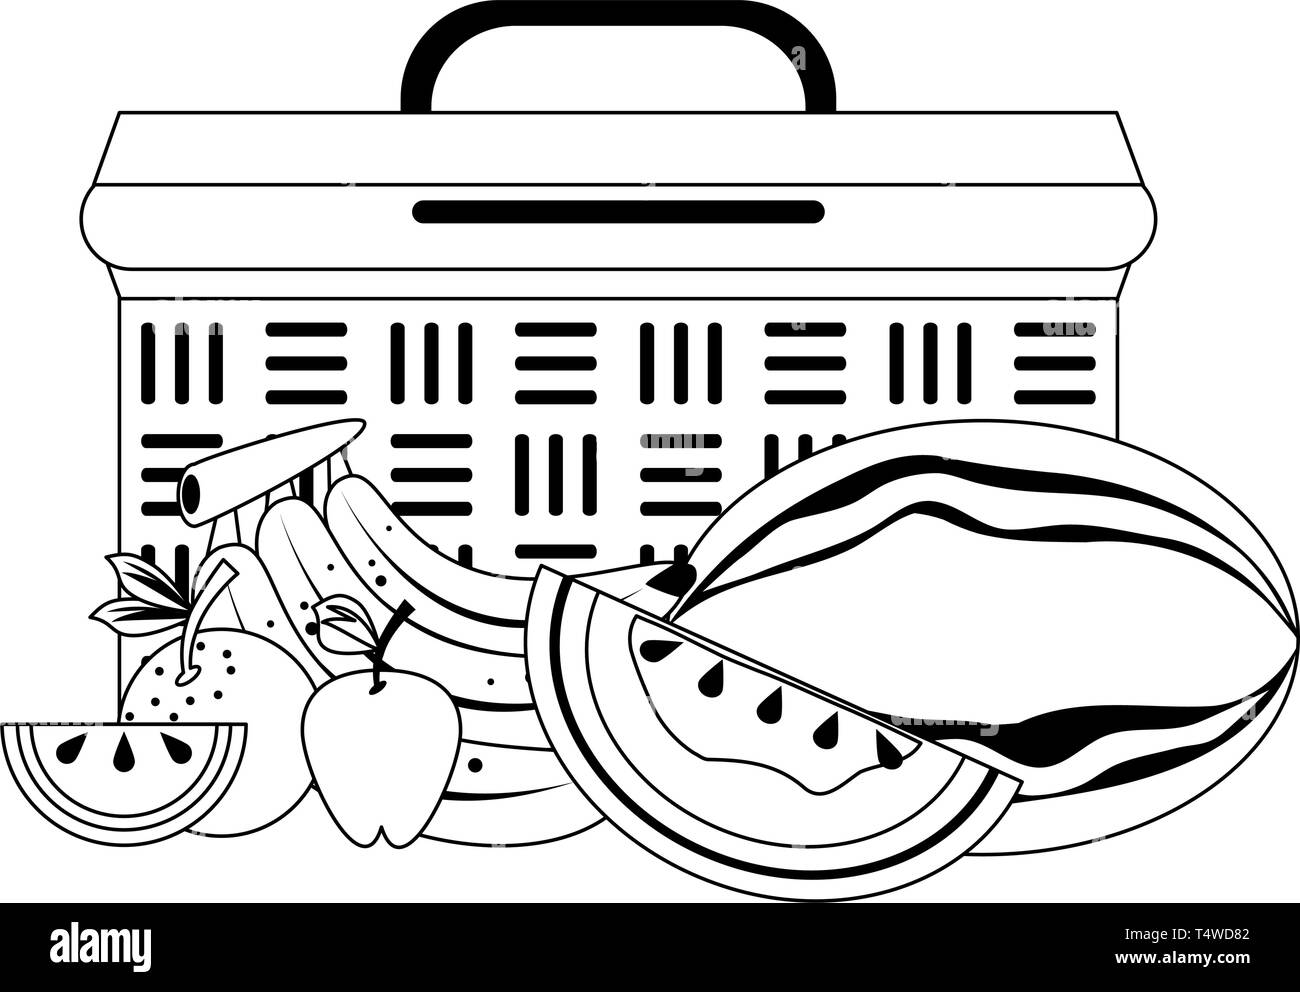 picnic basket clip art black and white